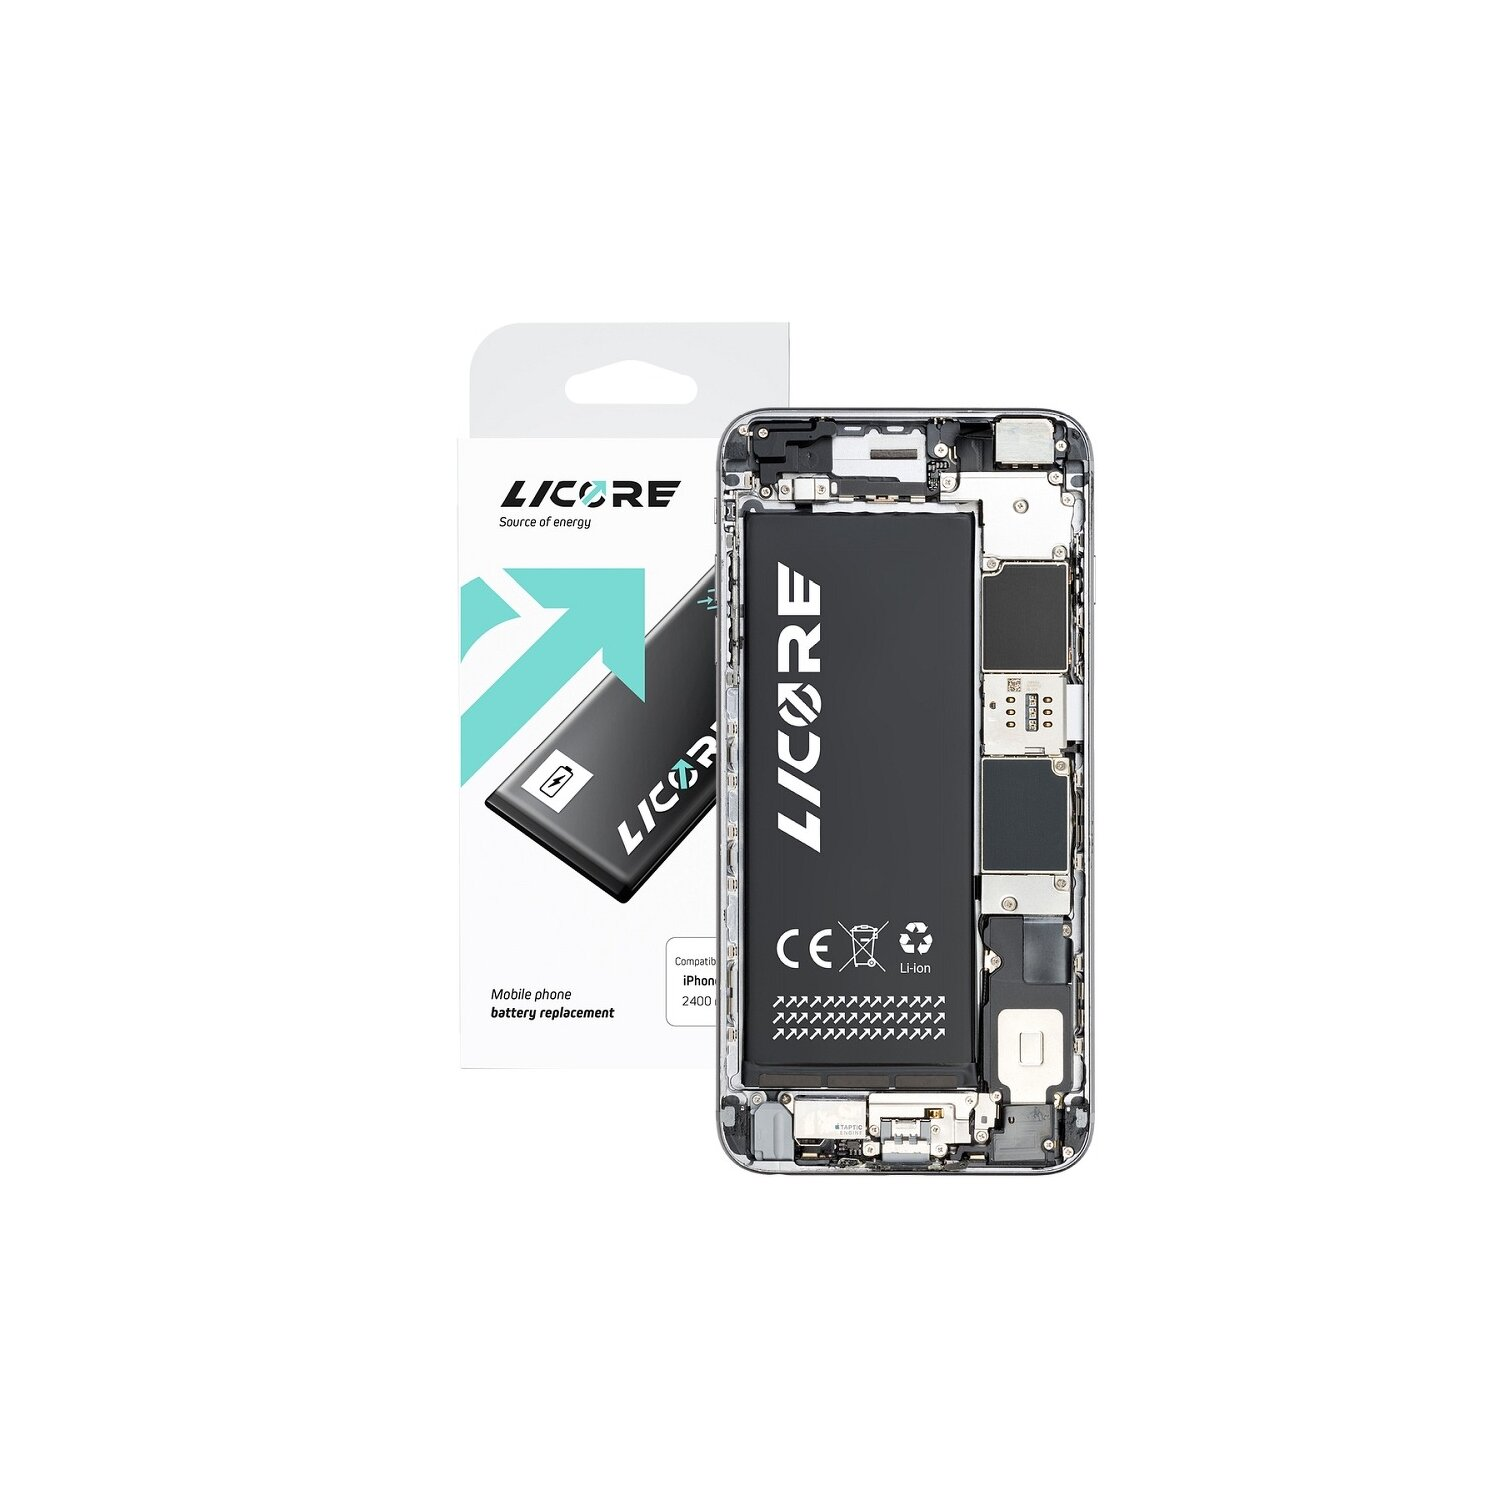 COFI Licore Akku Ersatz kompatibel 1430mAh li-Ion iPhone mit Akku 4s